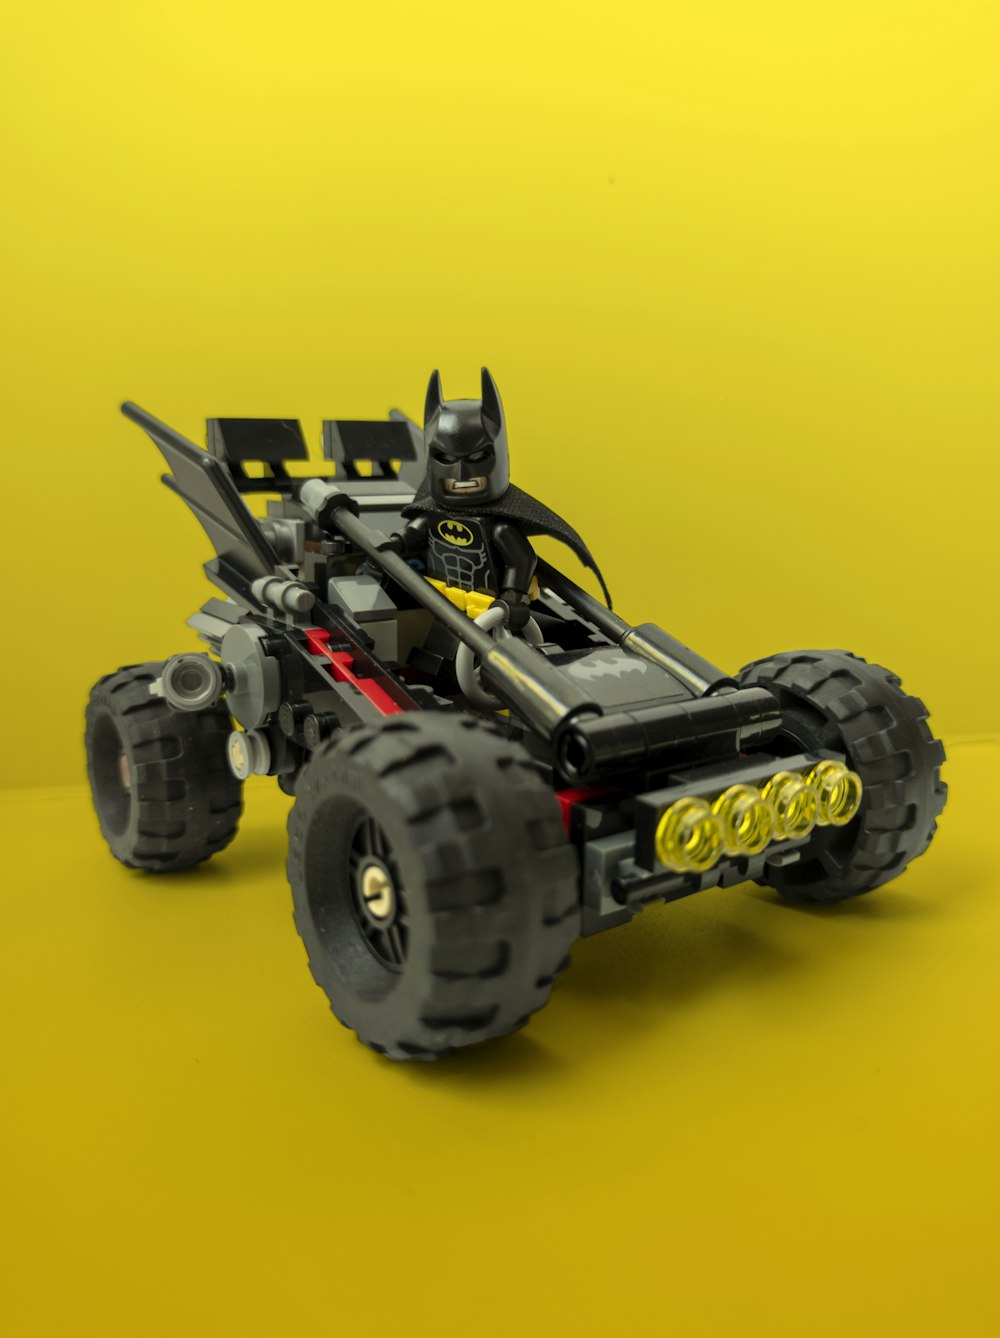 jouet monster truck noir et jaune